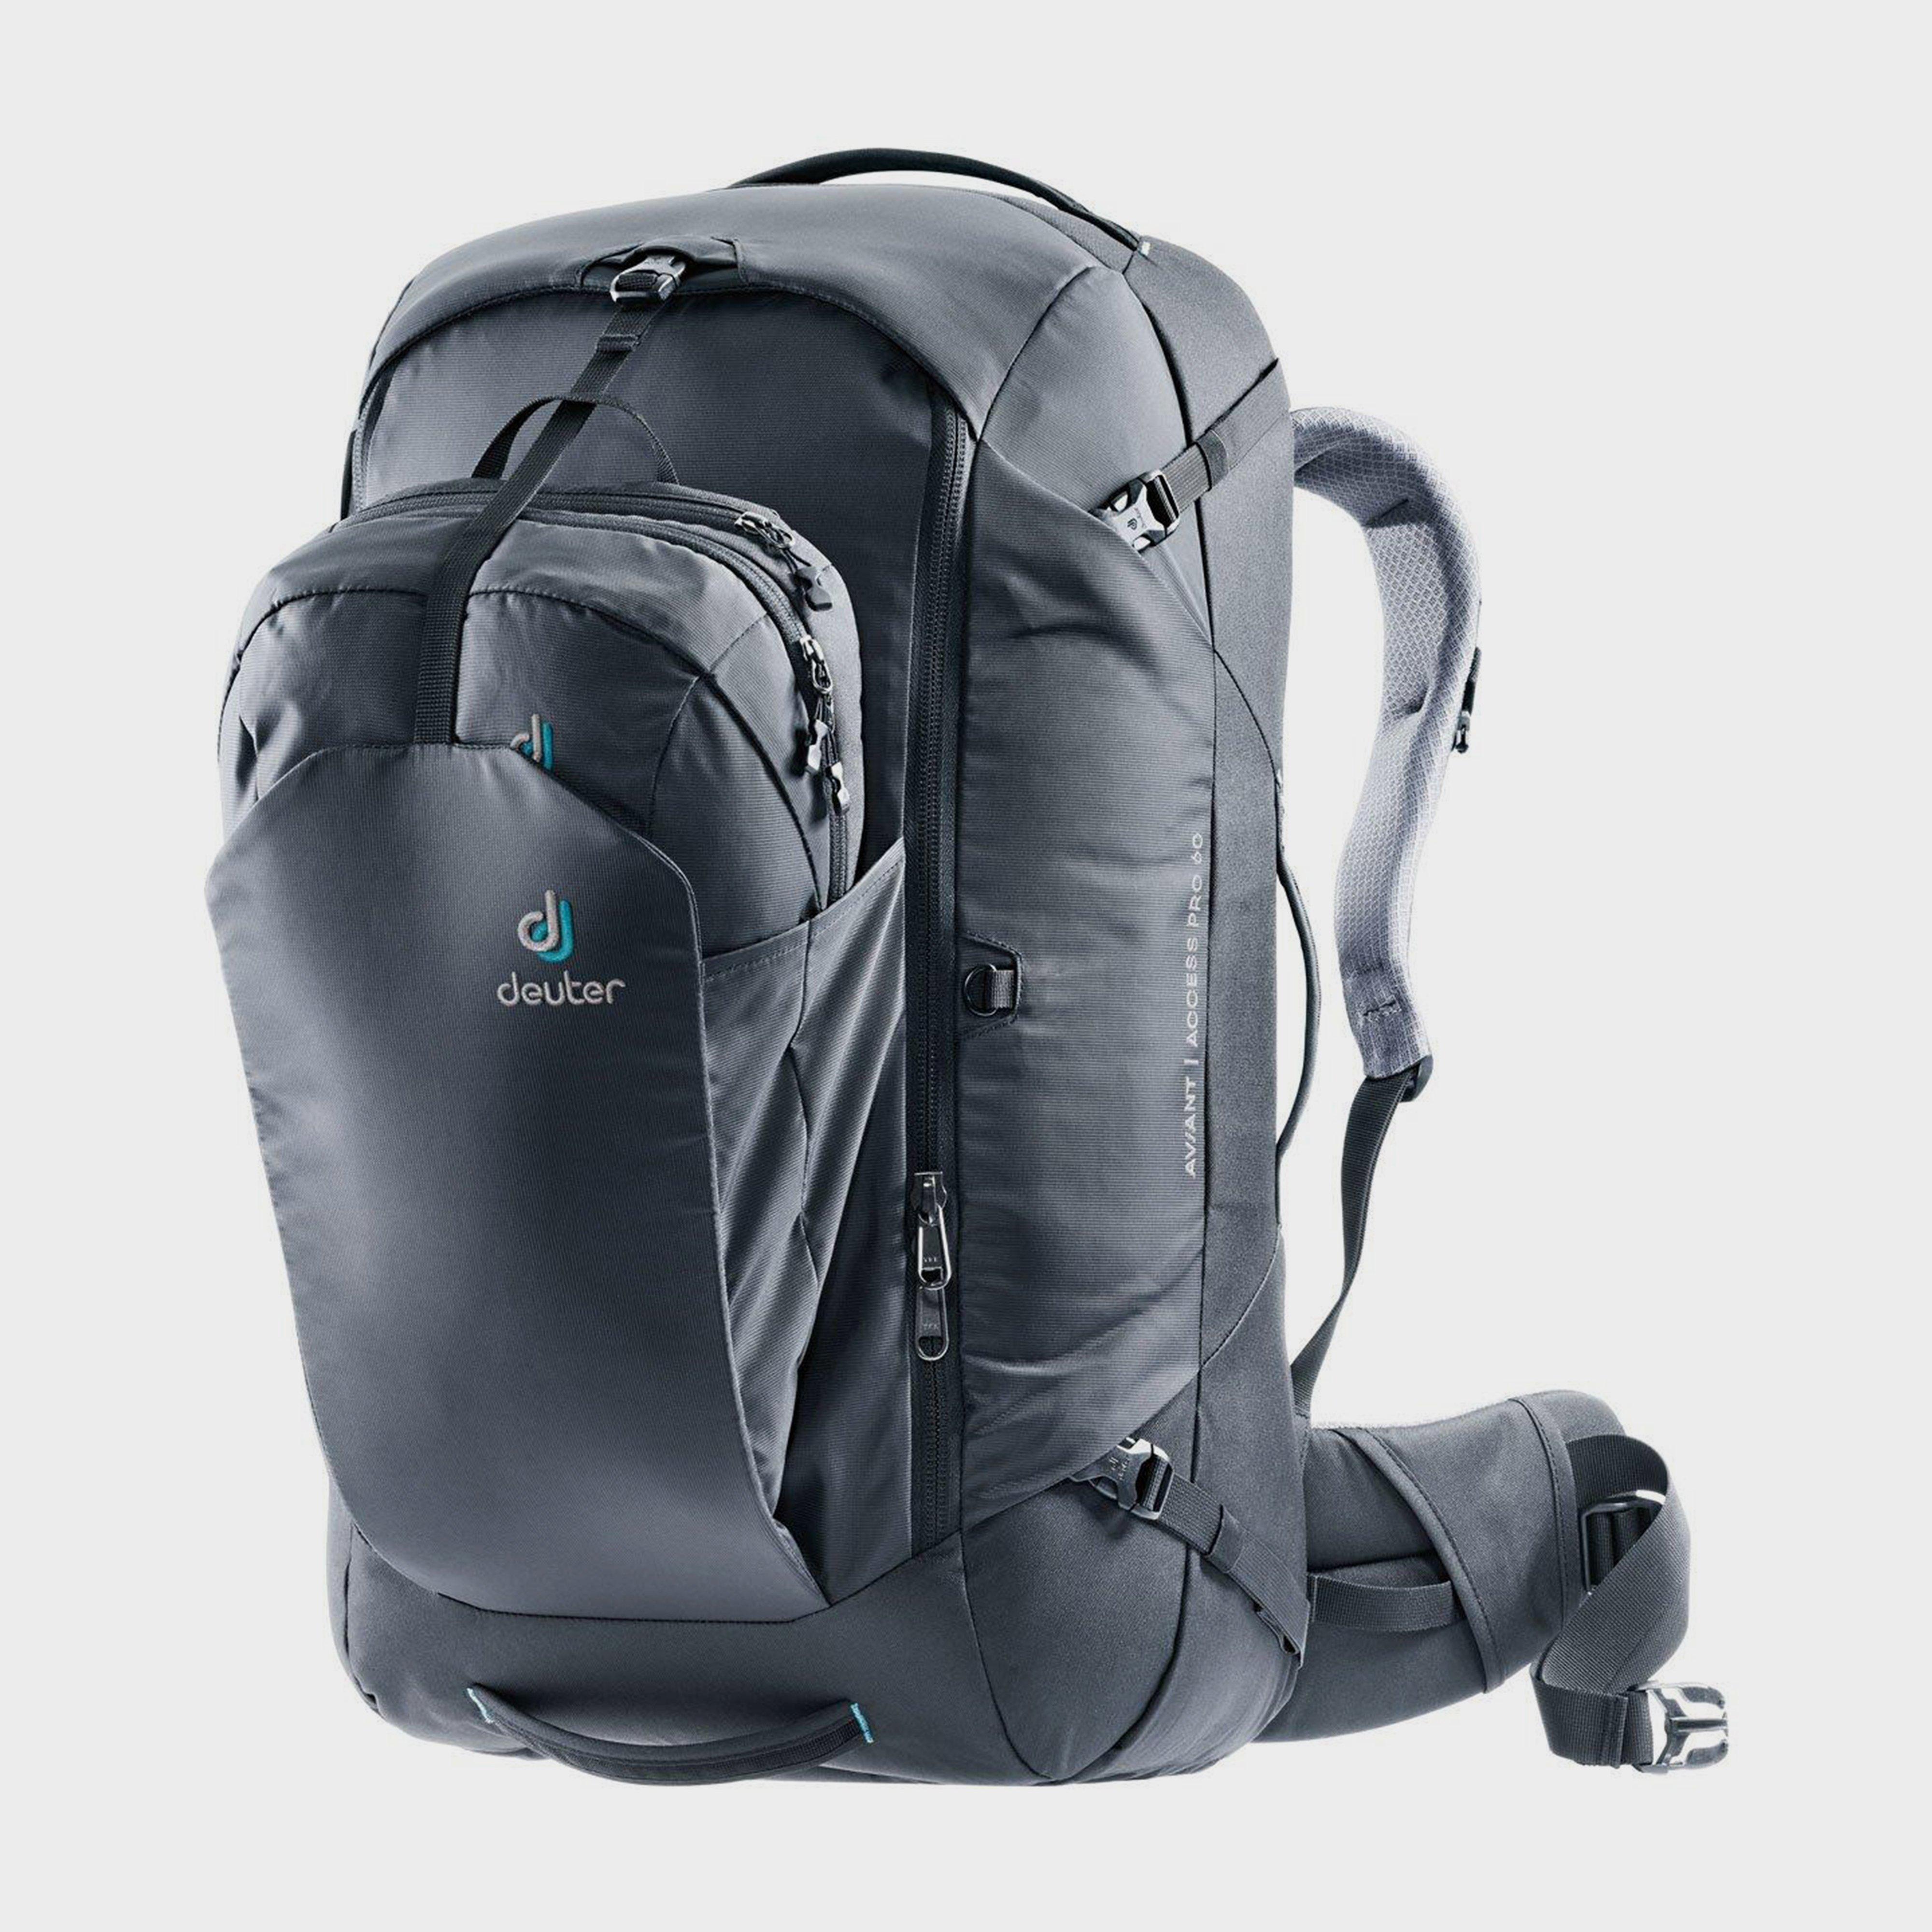 Deuter Aviant Pro 60 Travel Backpack - Black/black  Black/black